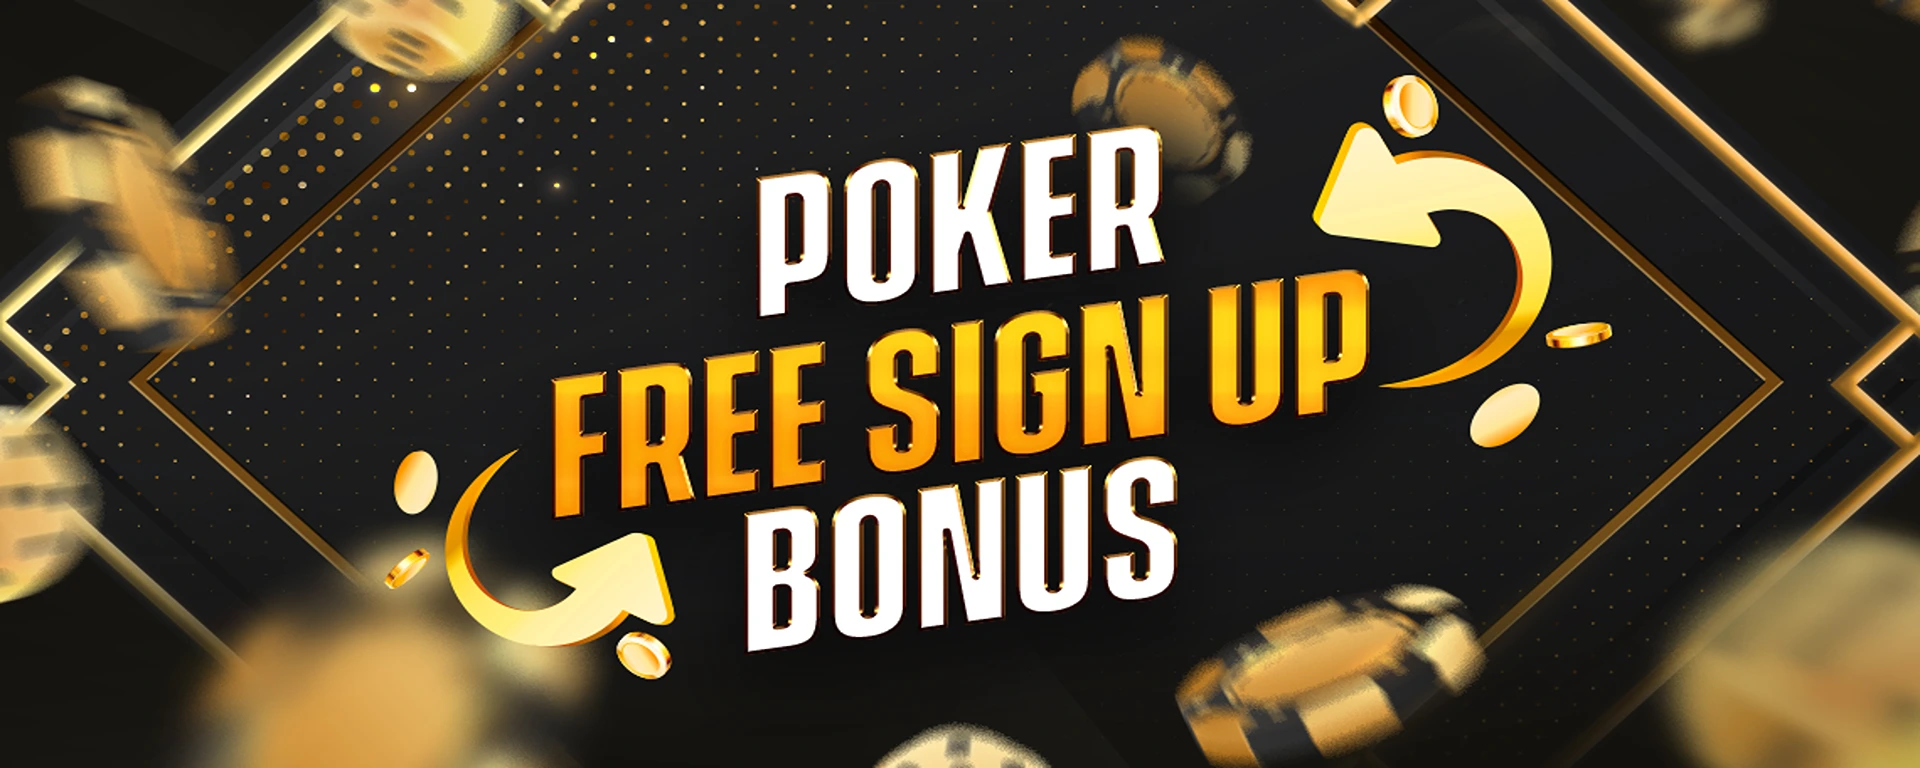 Poker Free Sign up Bonus